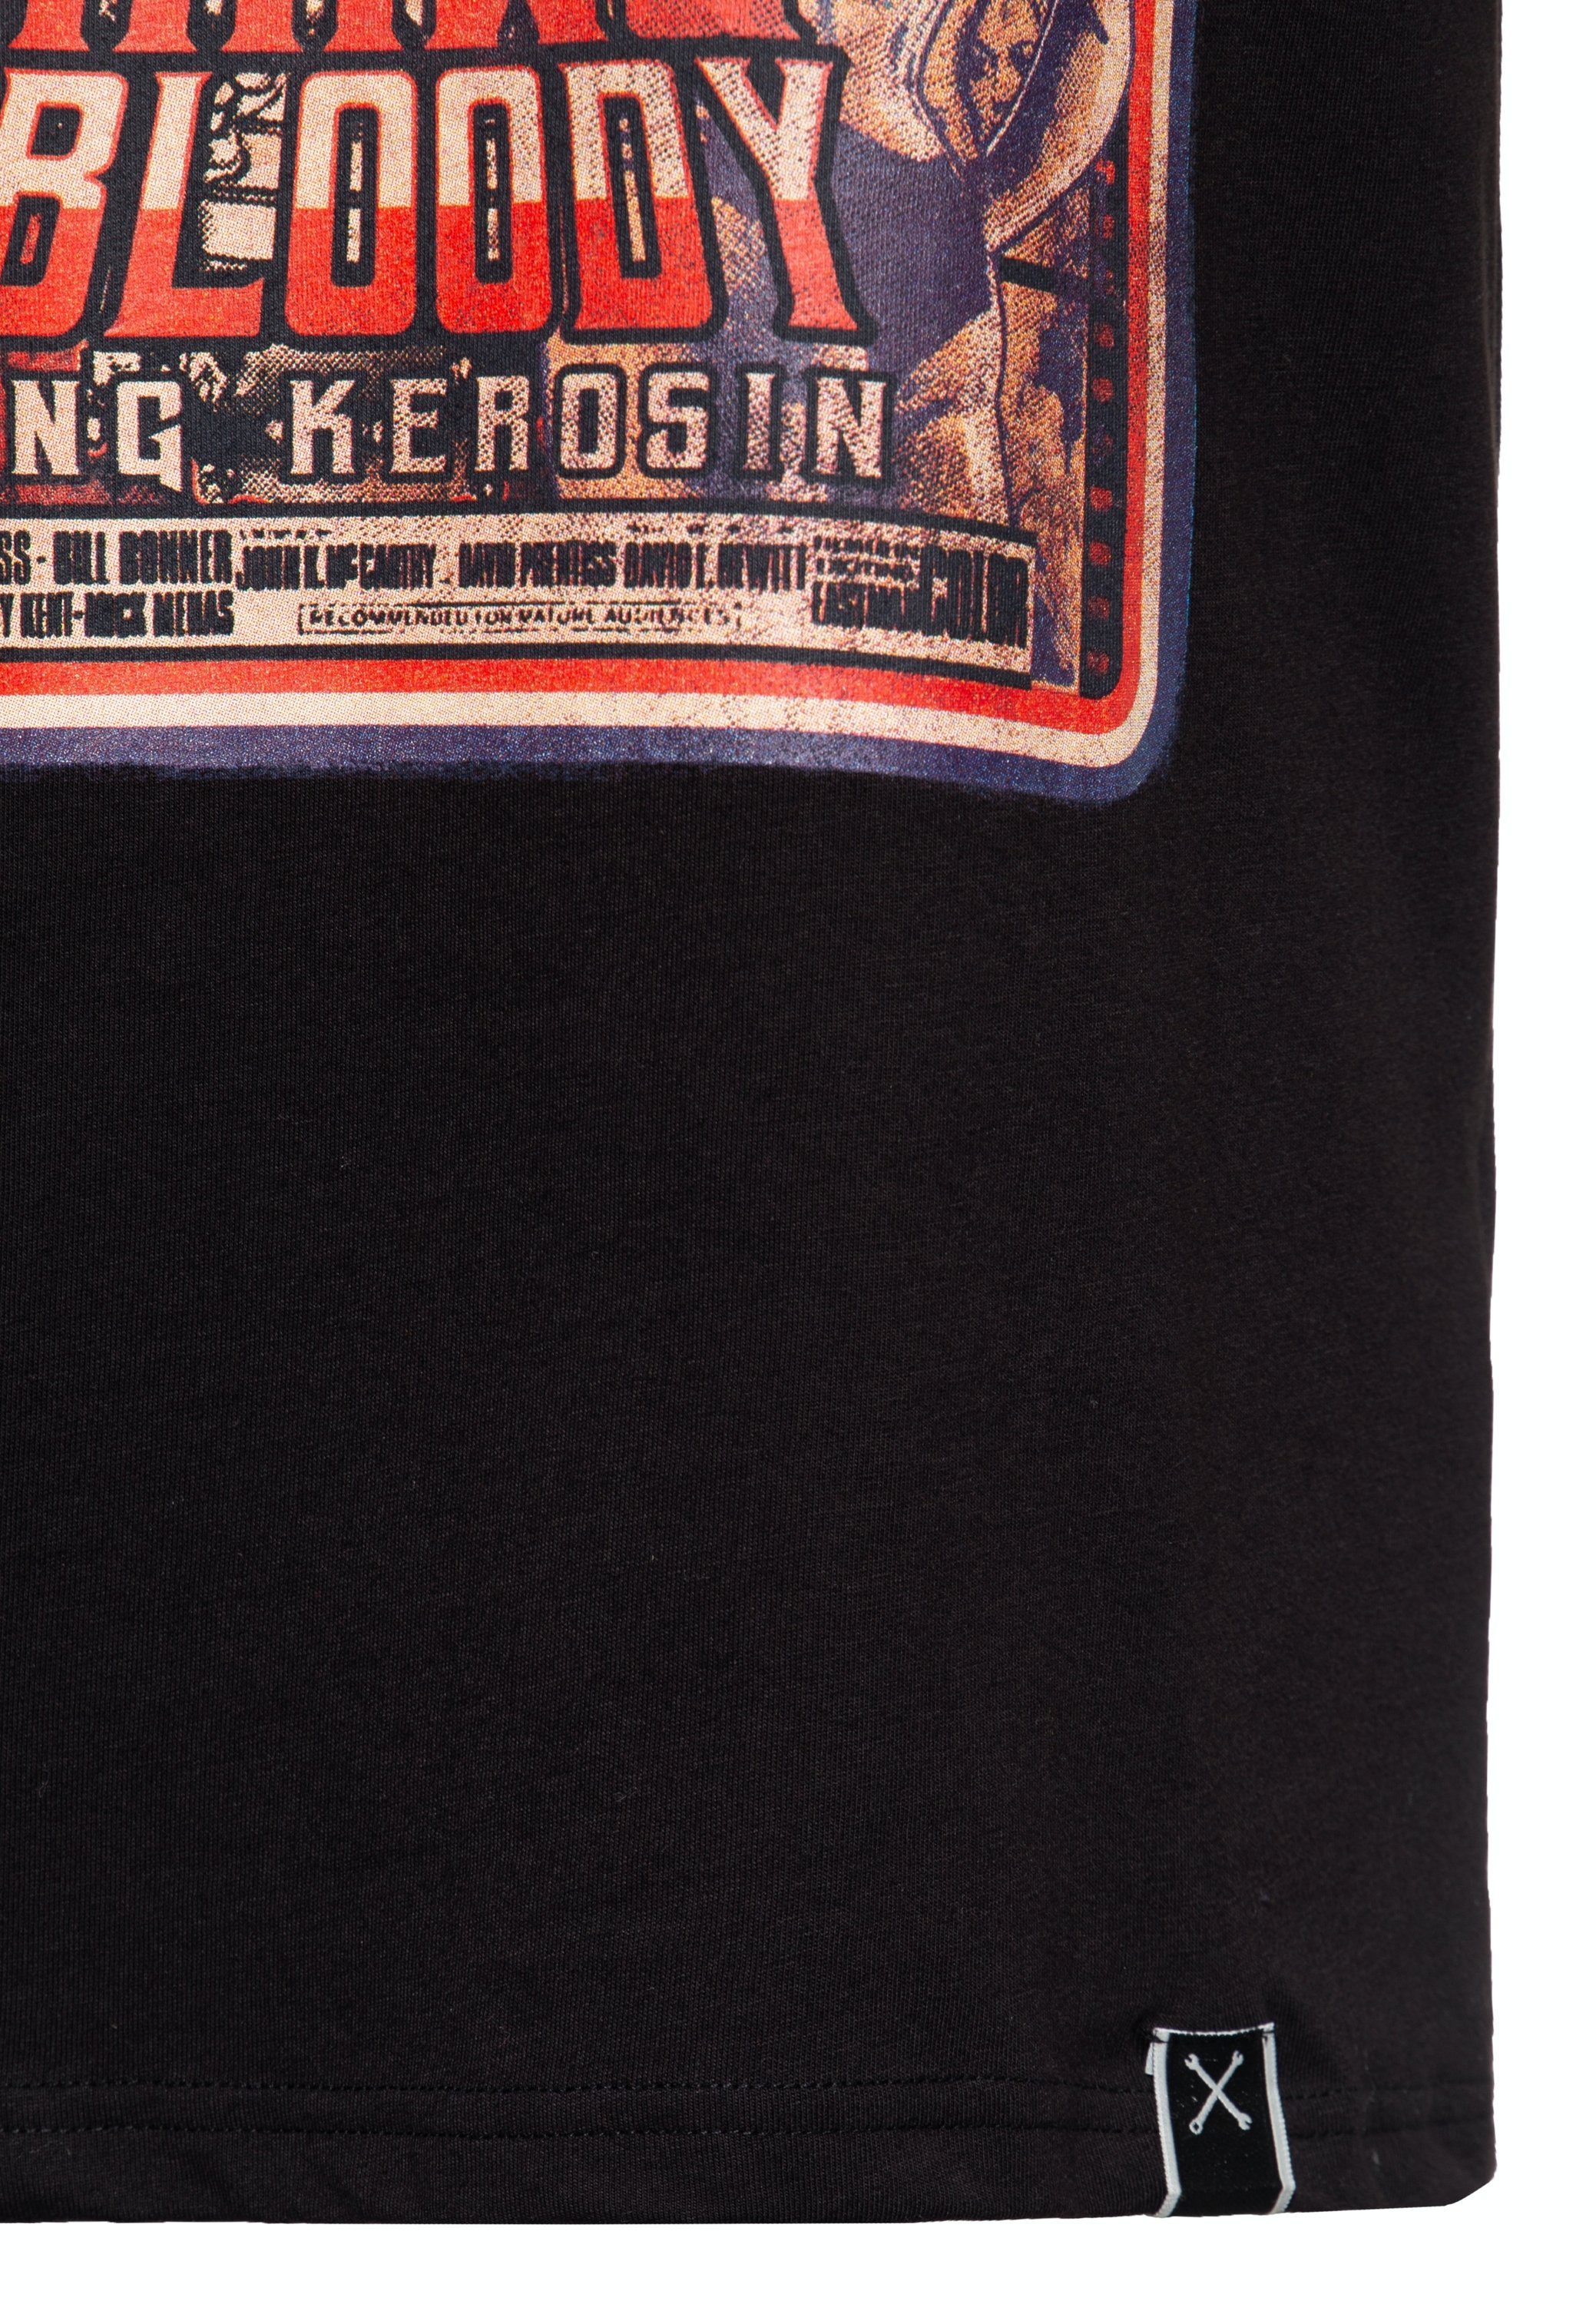 Maurer Bloody Raw & KingKerosin Special Lucki Edition T-Shirt